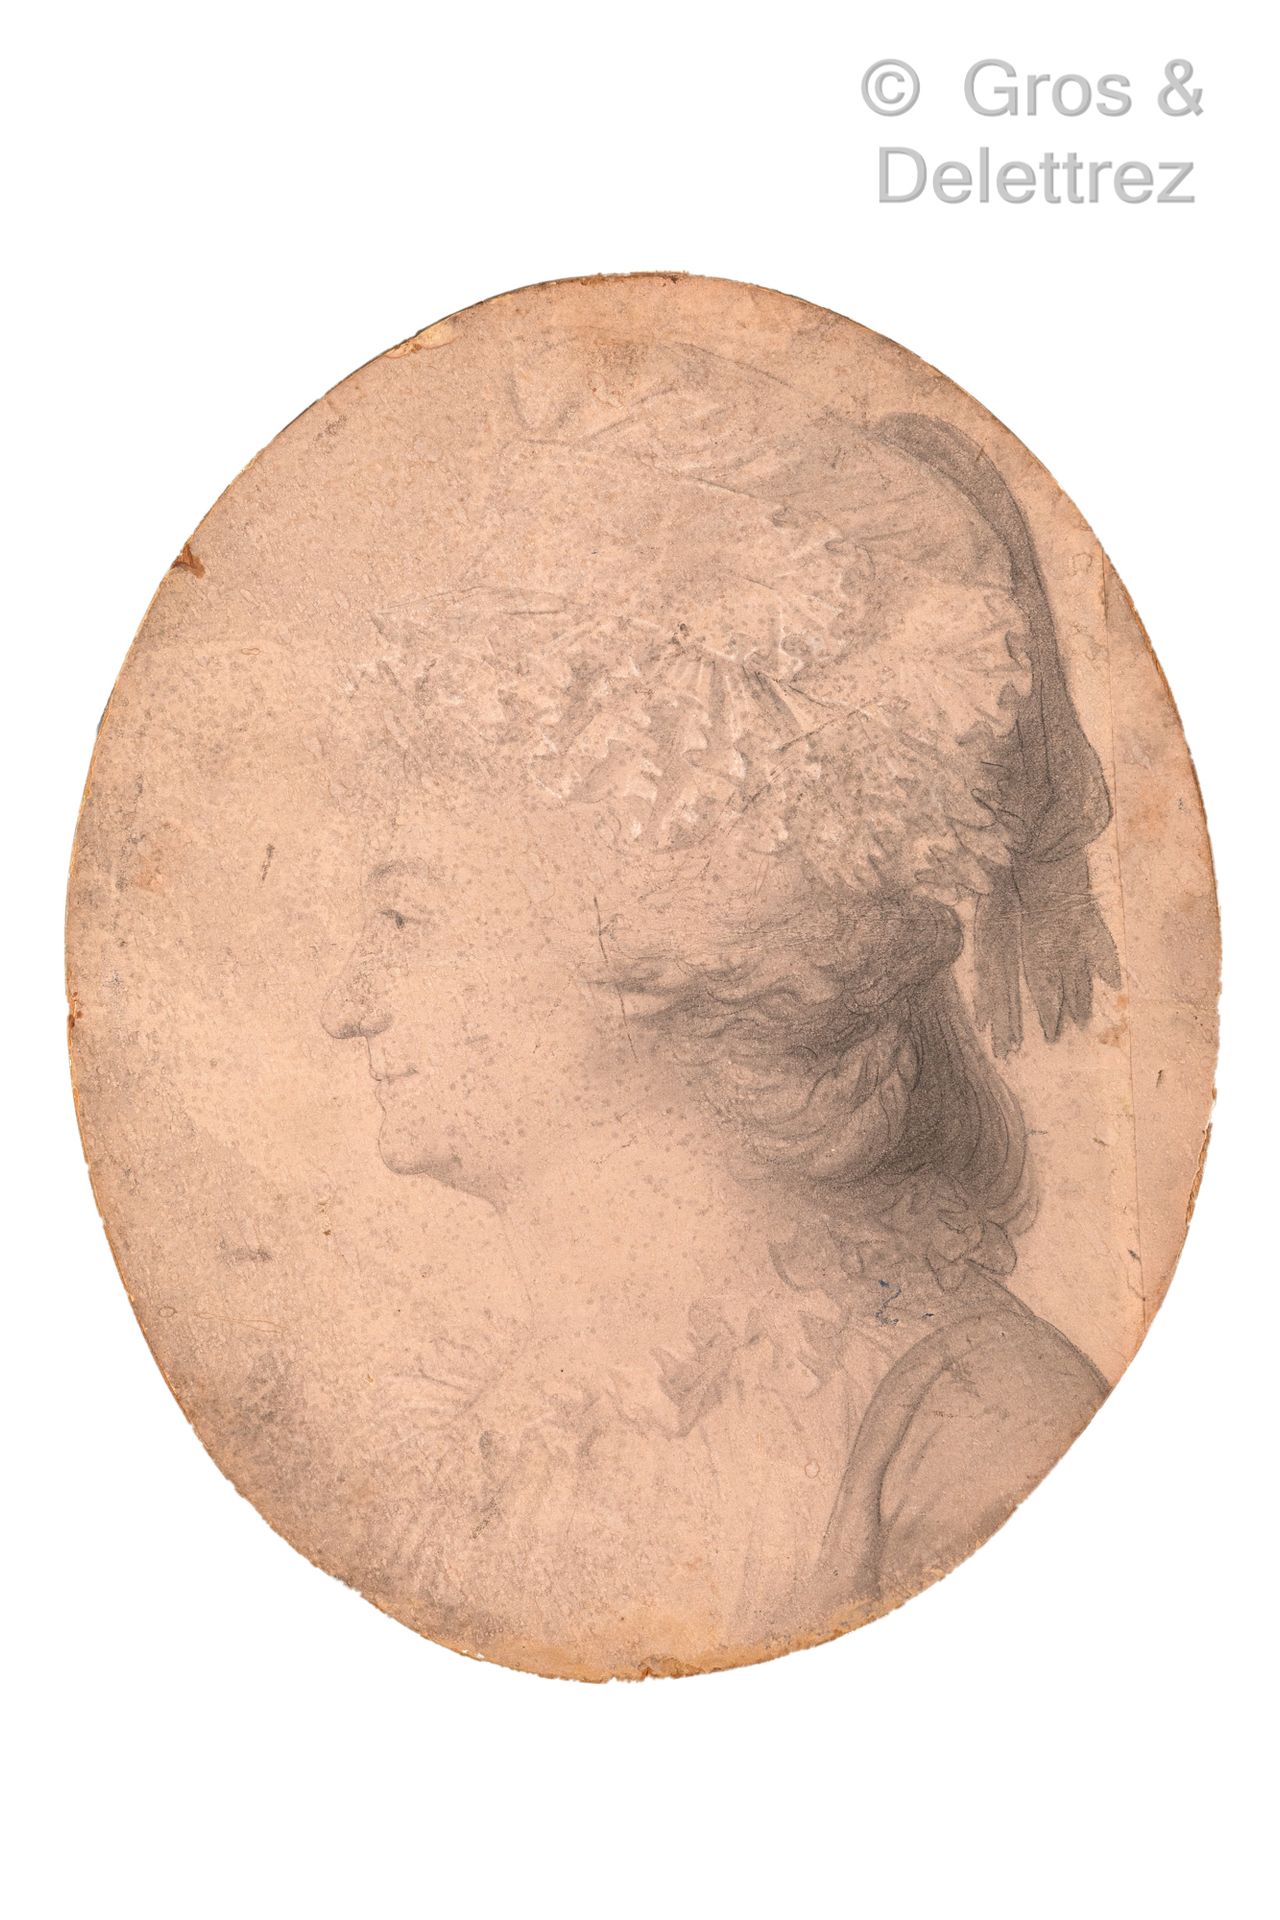 Null 18世纪末弗朗索瓦-安德烈-文森品味的法国学校

一个女人的侧面肖像

椭圆形的黑色石头画，纸上有白色粉笔的亮点（完全是斑驳的旧水印，未染色）。

4&hellip;